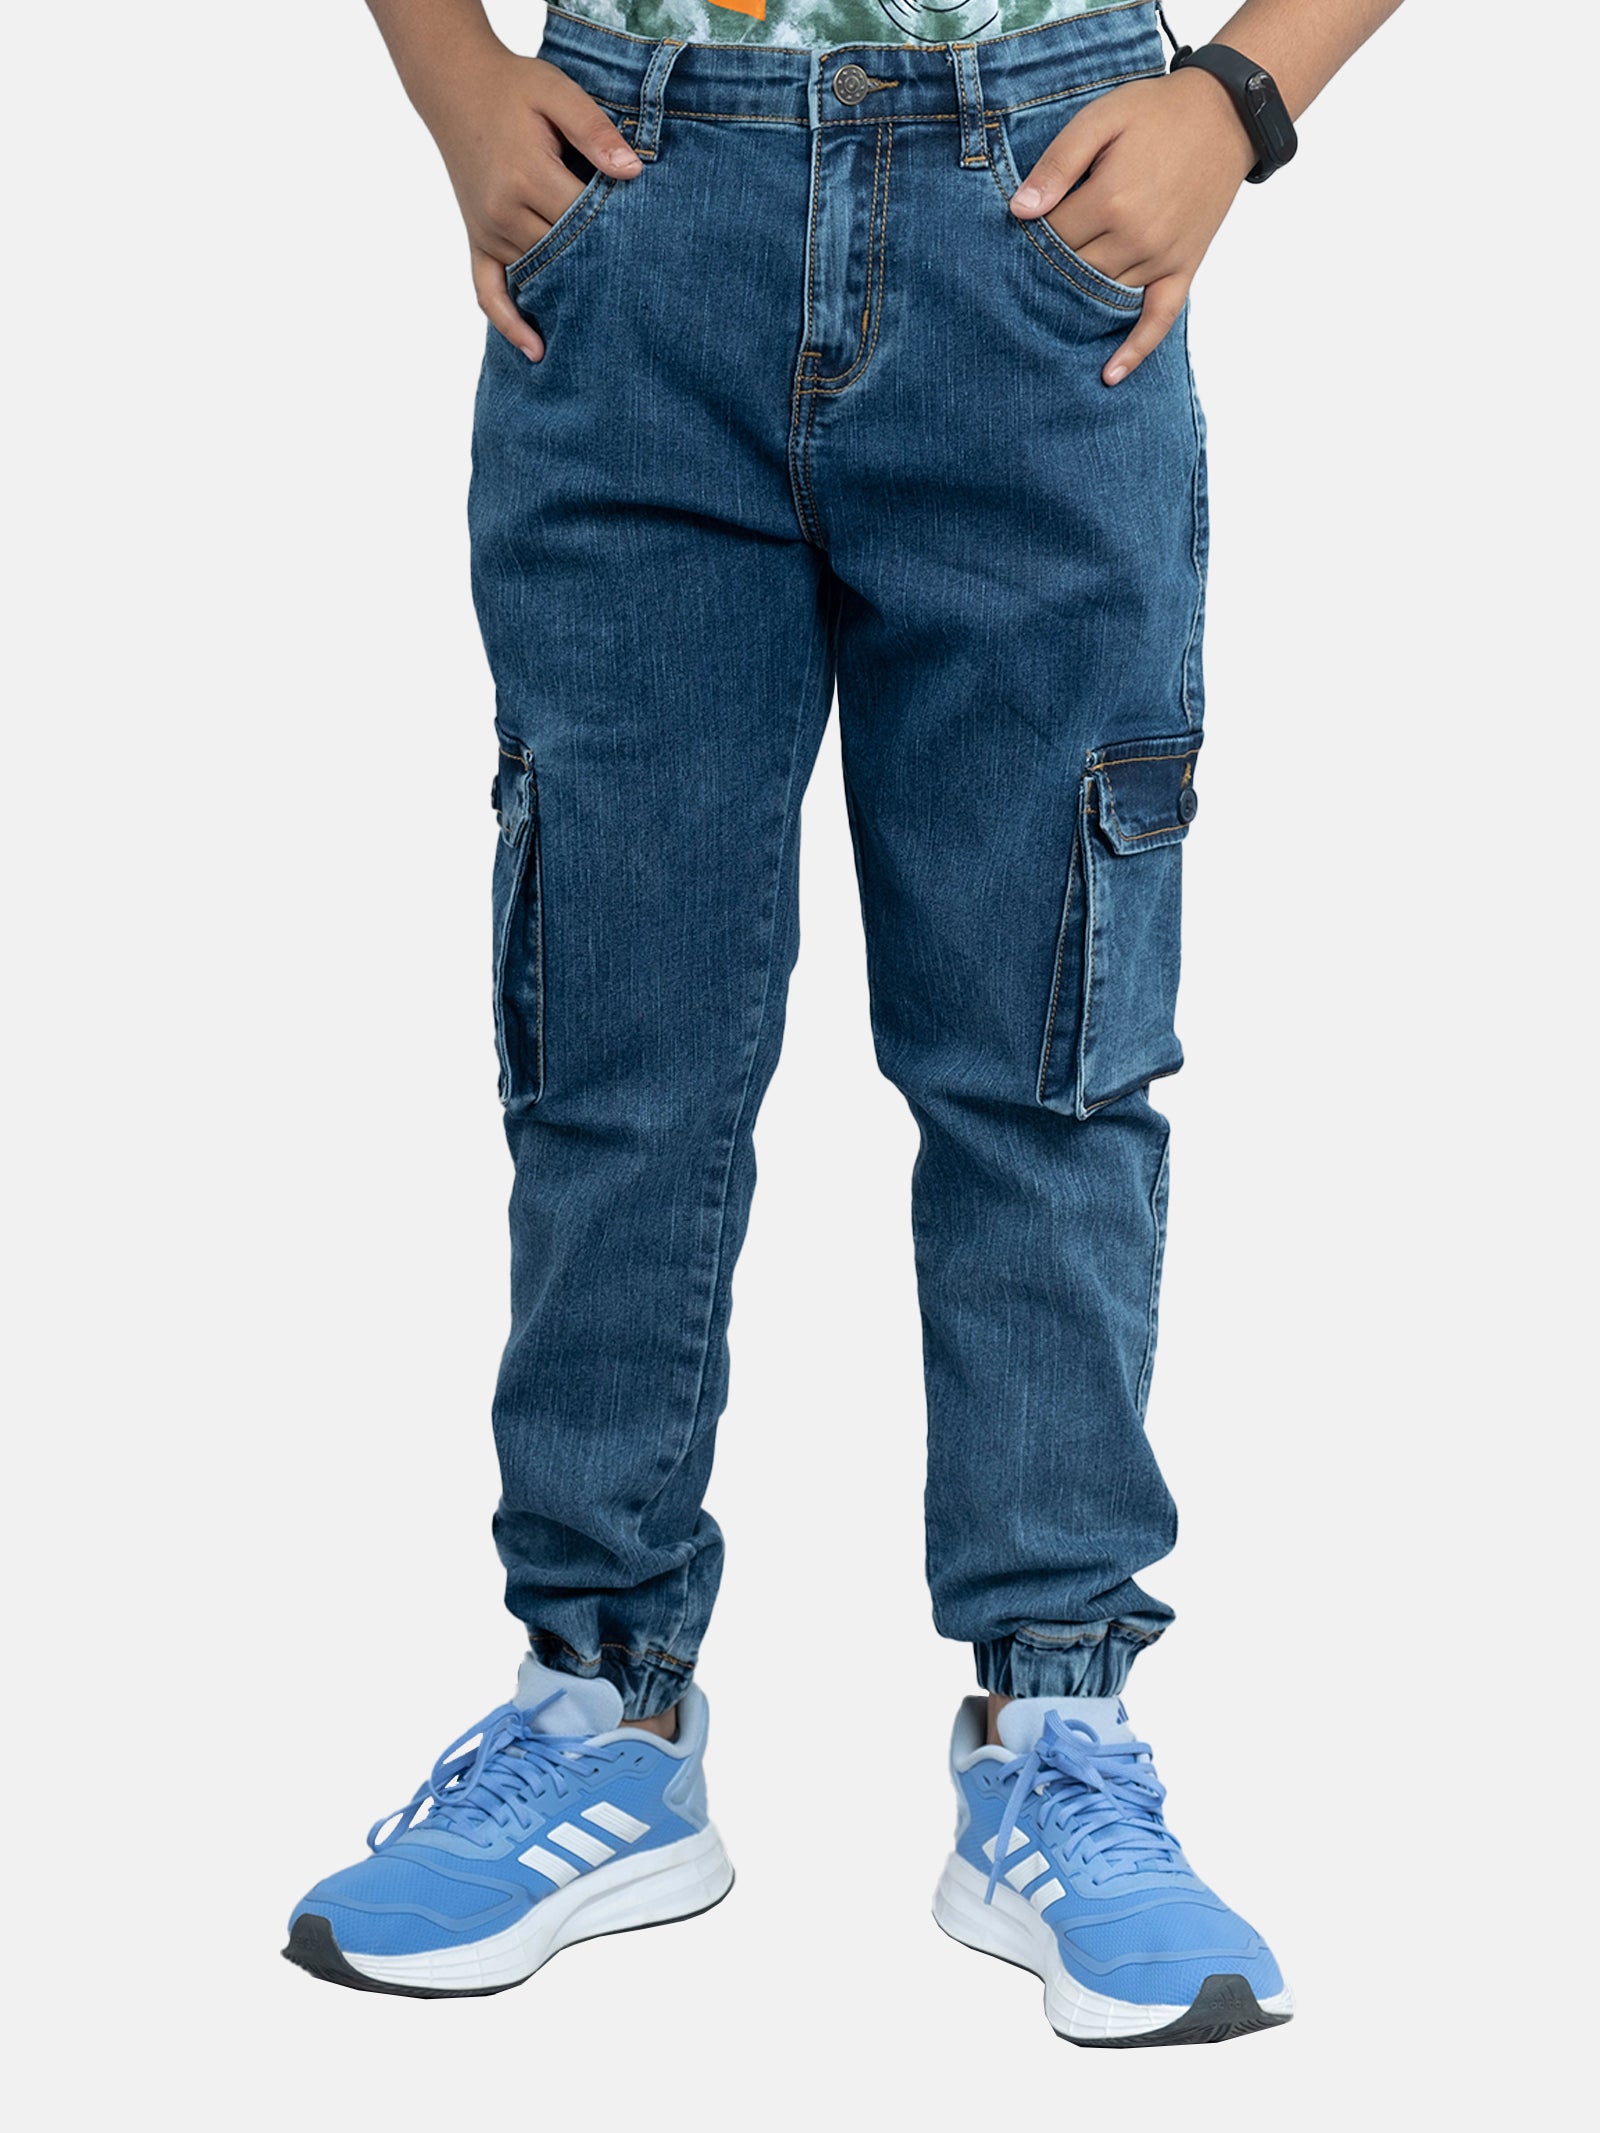 Kiddopanti Full Sleeves Denim Shirt & Basic 5 Pocket Denim Pants Set - Light Blue & Midnight Blue - Cotton - 4 to 6 Years - Blue - Boys - for Kids